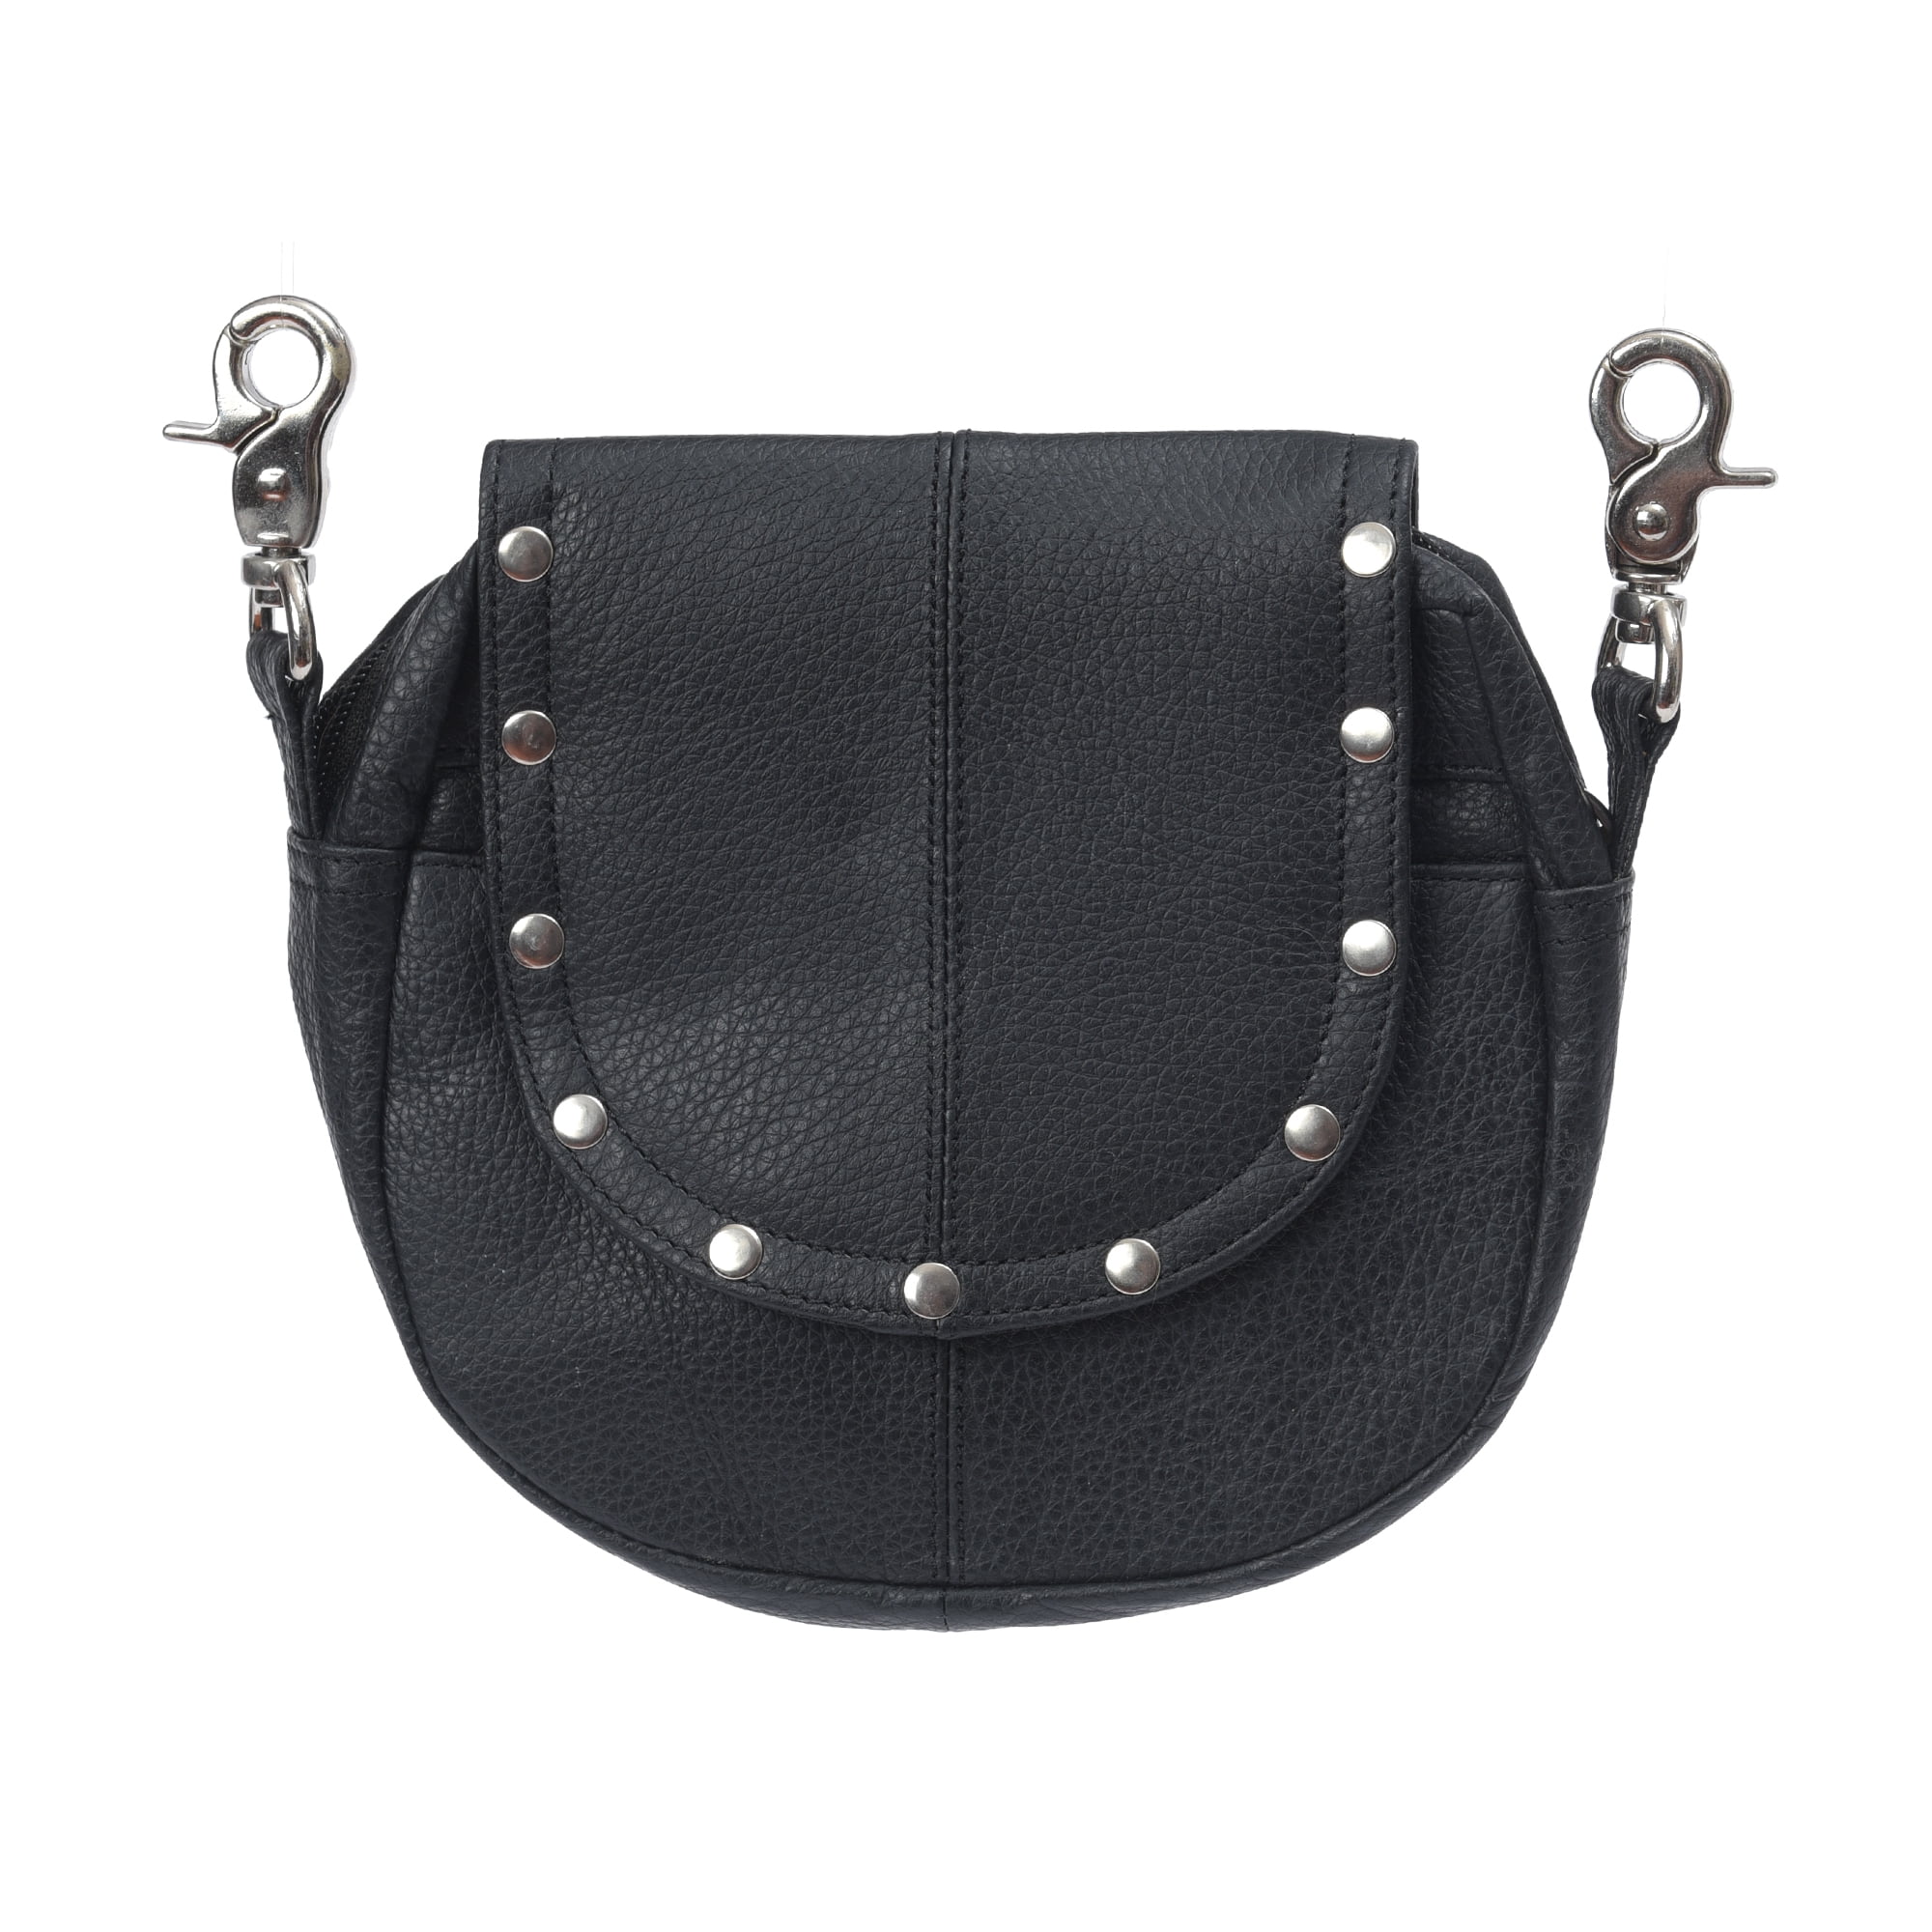 Bayfield Bags Hip Bag for Women Leather- Black Studded Cow Leather Cross-body Purse Biker Hip Bag & Motorcycle Waist Belt Bag, This Hip Clip Bag